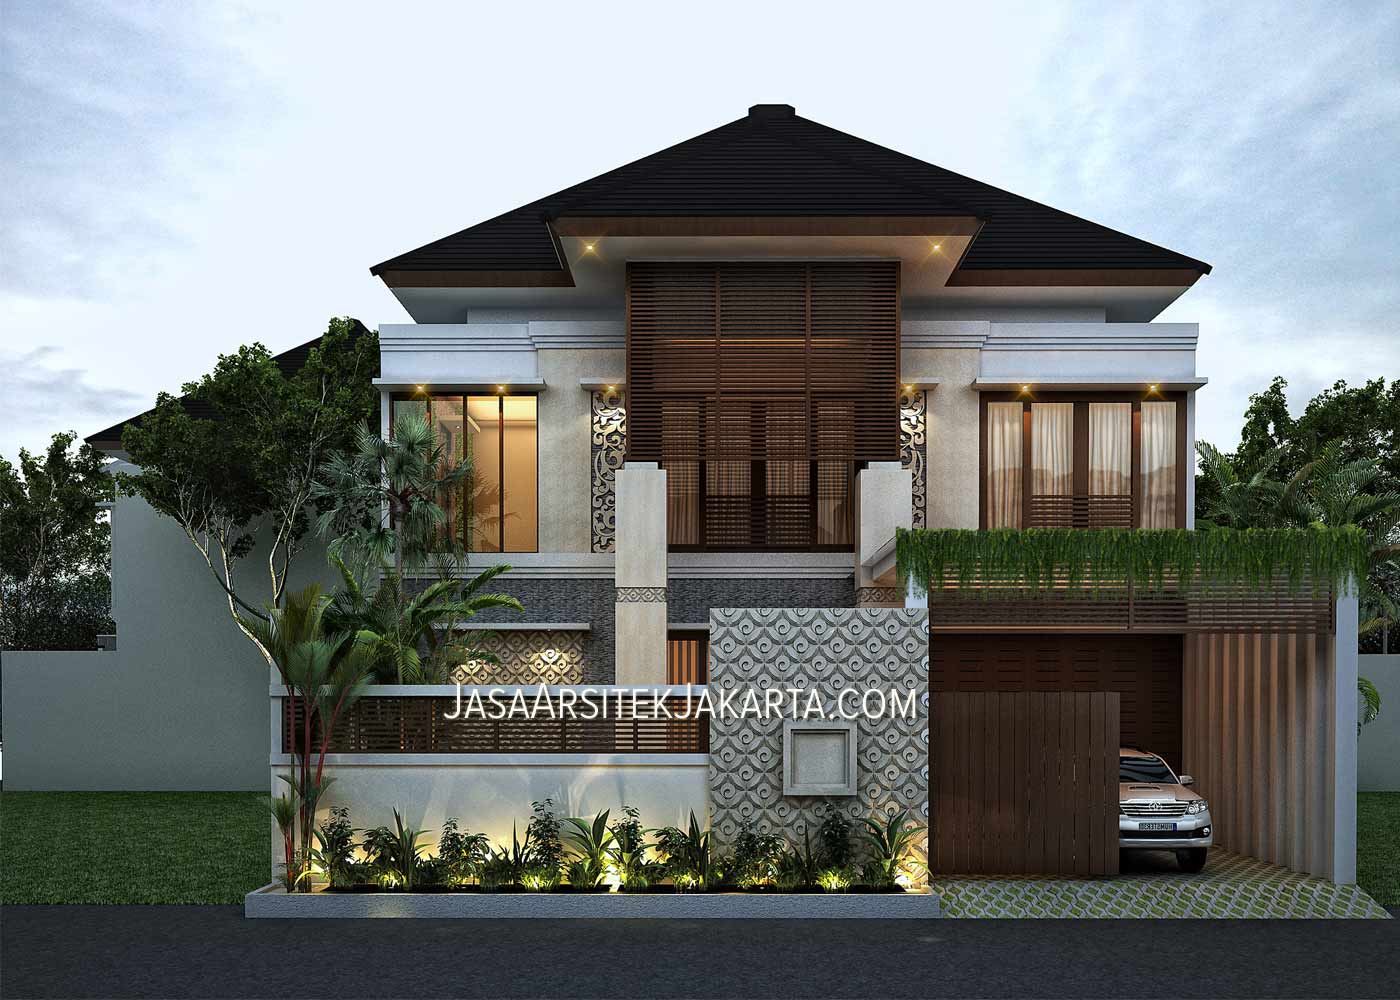 Kumpulan Jasa Desain Rumah Minimalis Di Bali Kumpulan Desain Rumah